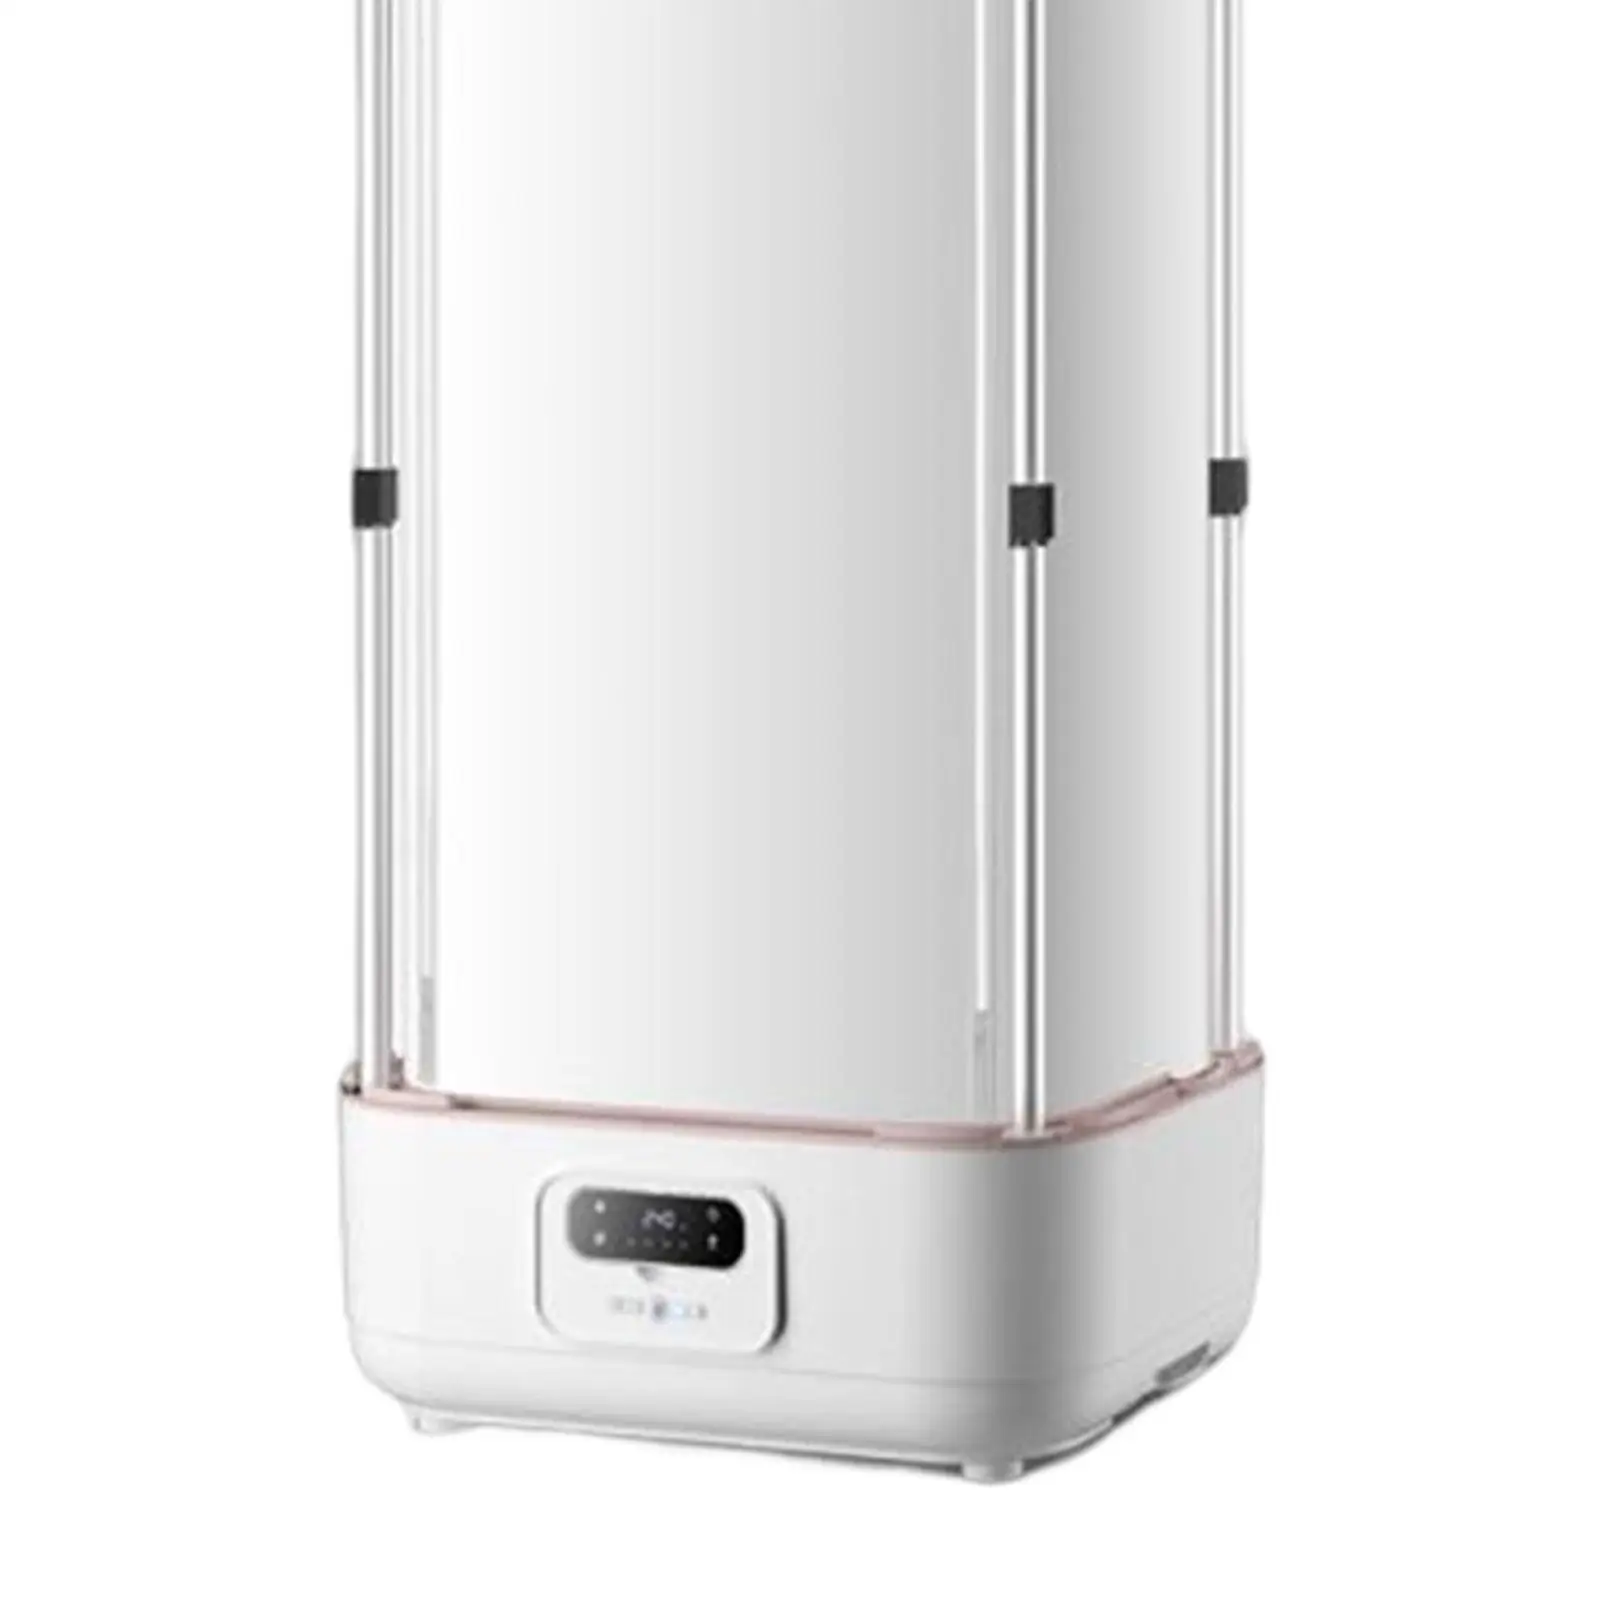 Foldable Electric Clothes Dryer Machine Waterproof Energy Saving Dustproof PTC Heating Drying Rack for Laundry Washroom Dorm